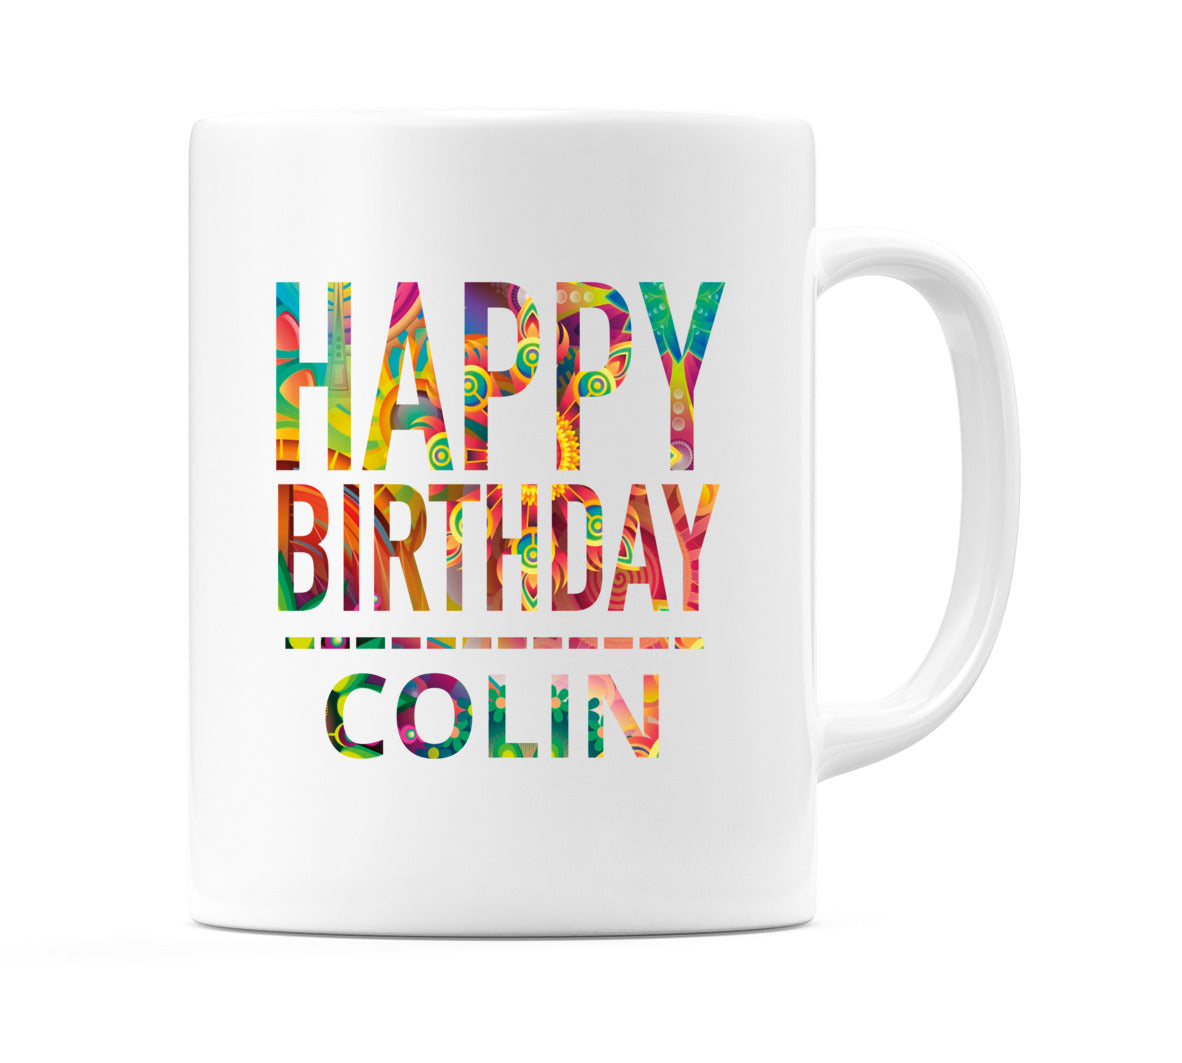 Happy Birthday Colin (Tie Dye Effect) Mug Cup by WeDoMugs